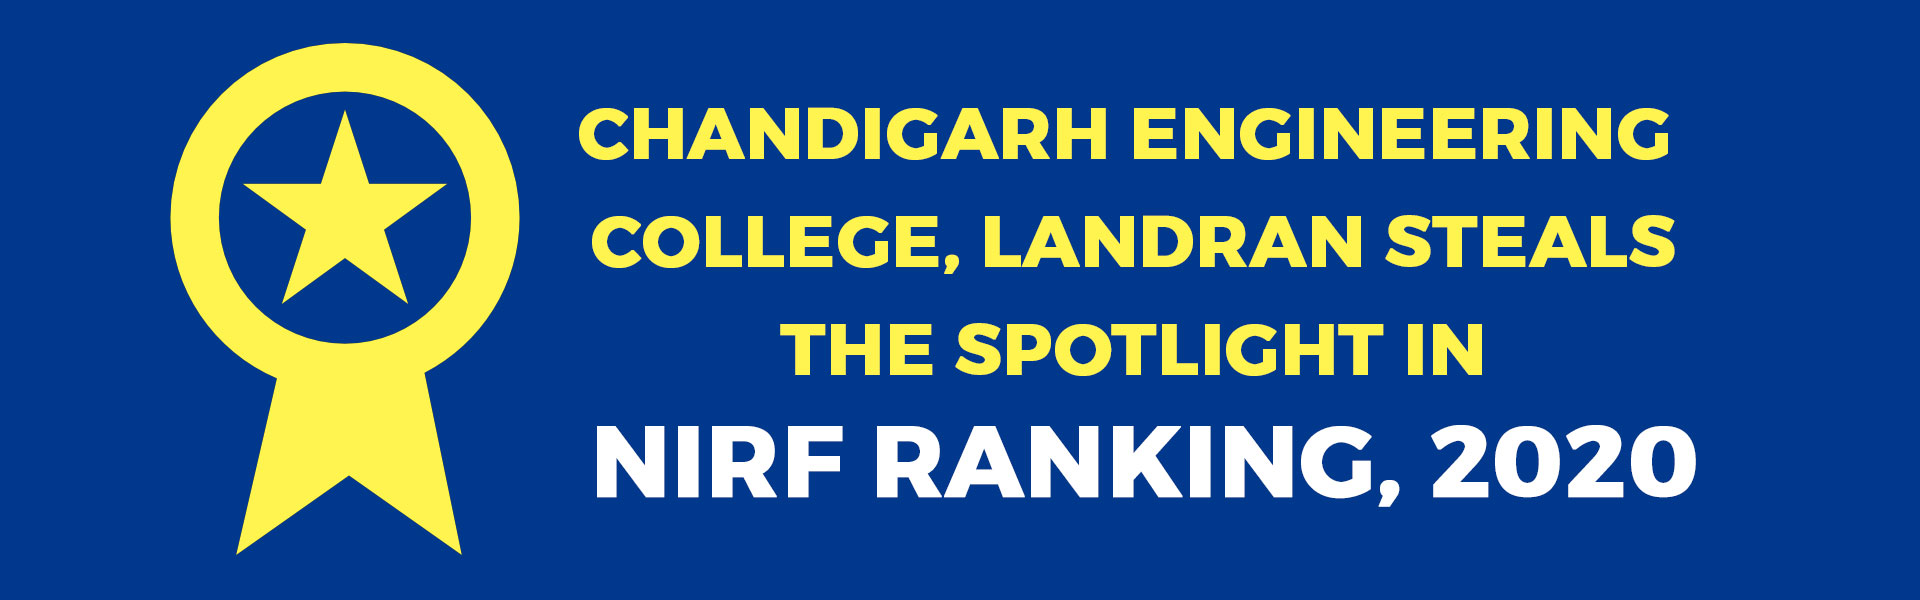 Chandigarh Engineering College, Landran steals the spotlight in NIRF Ranking, 2020 